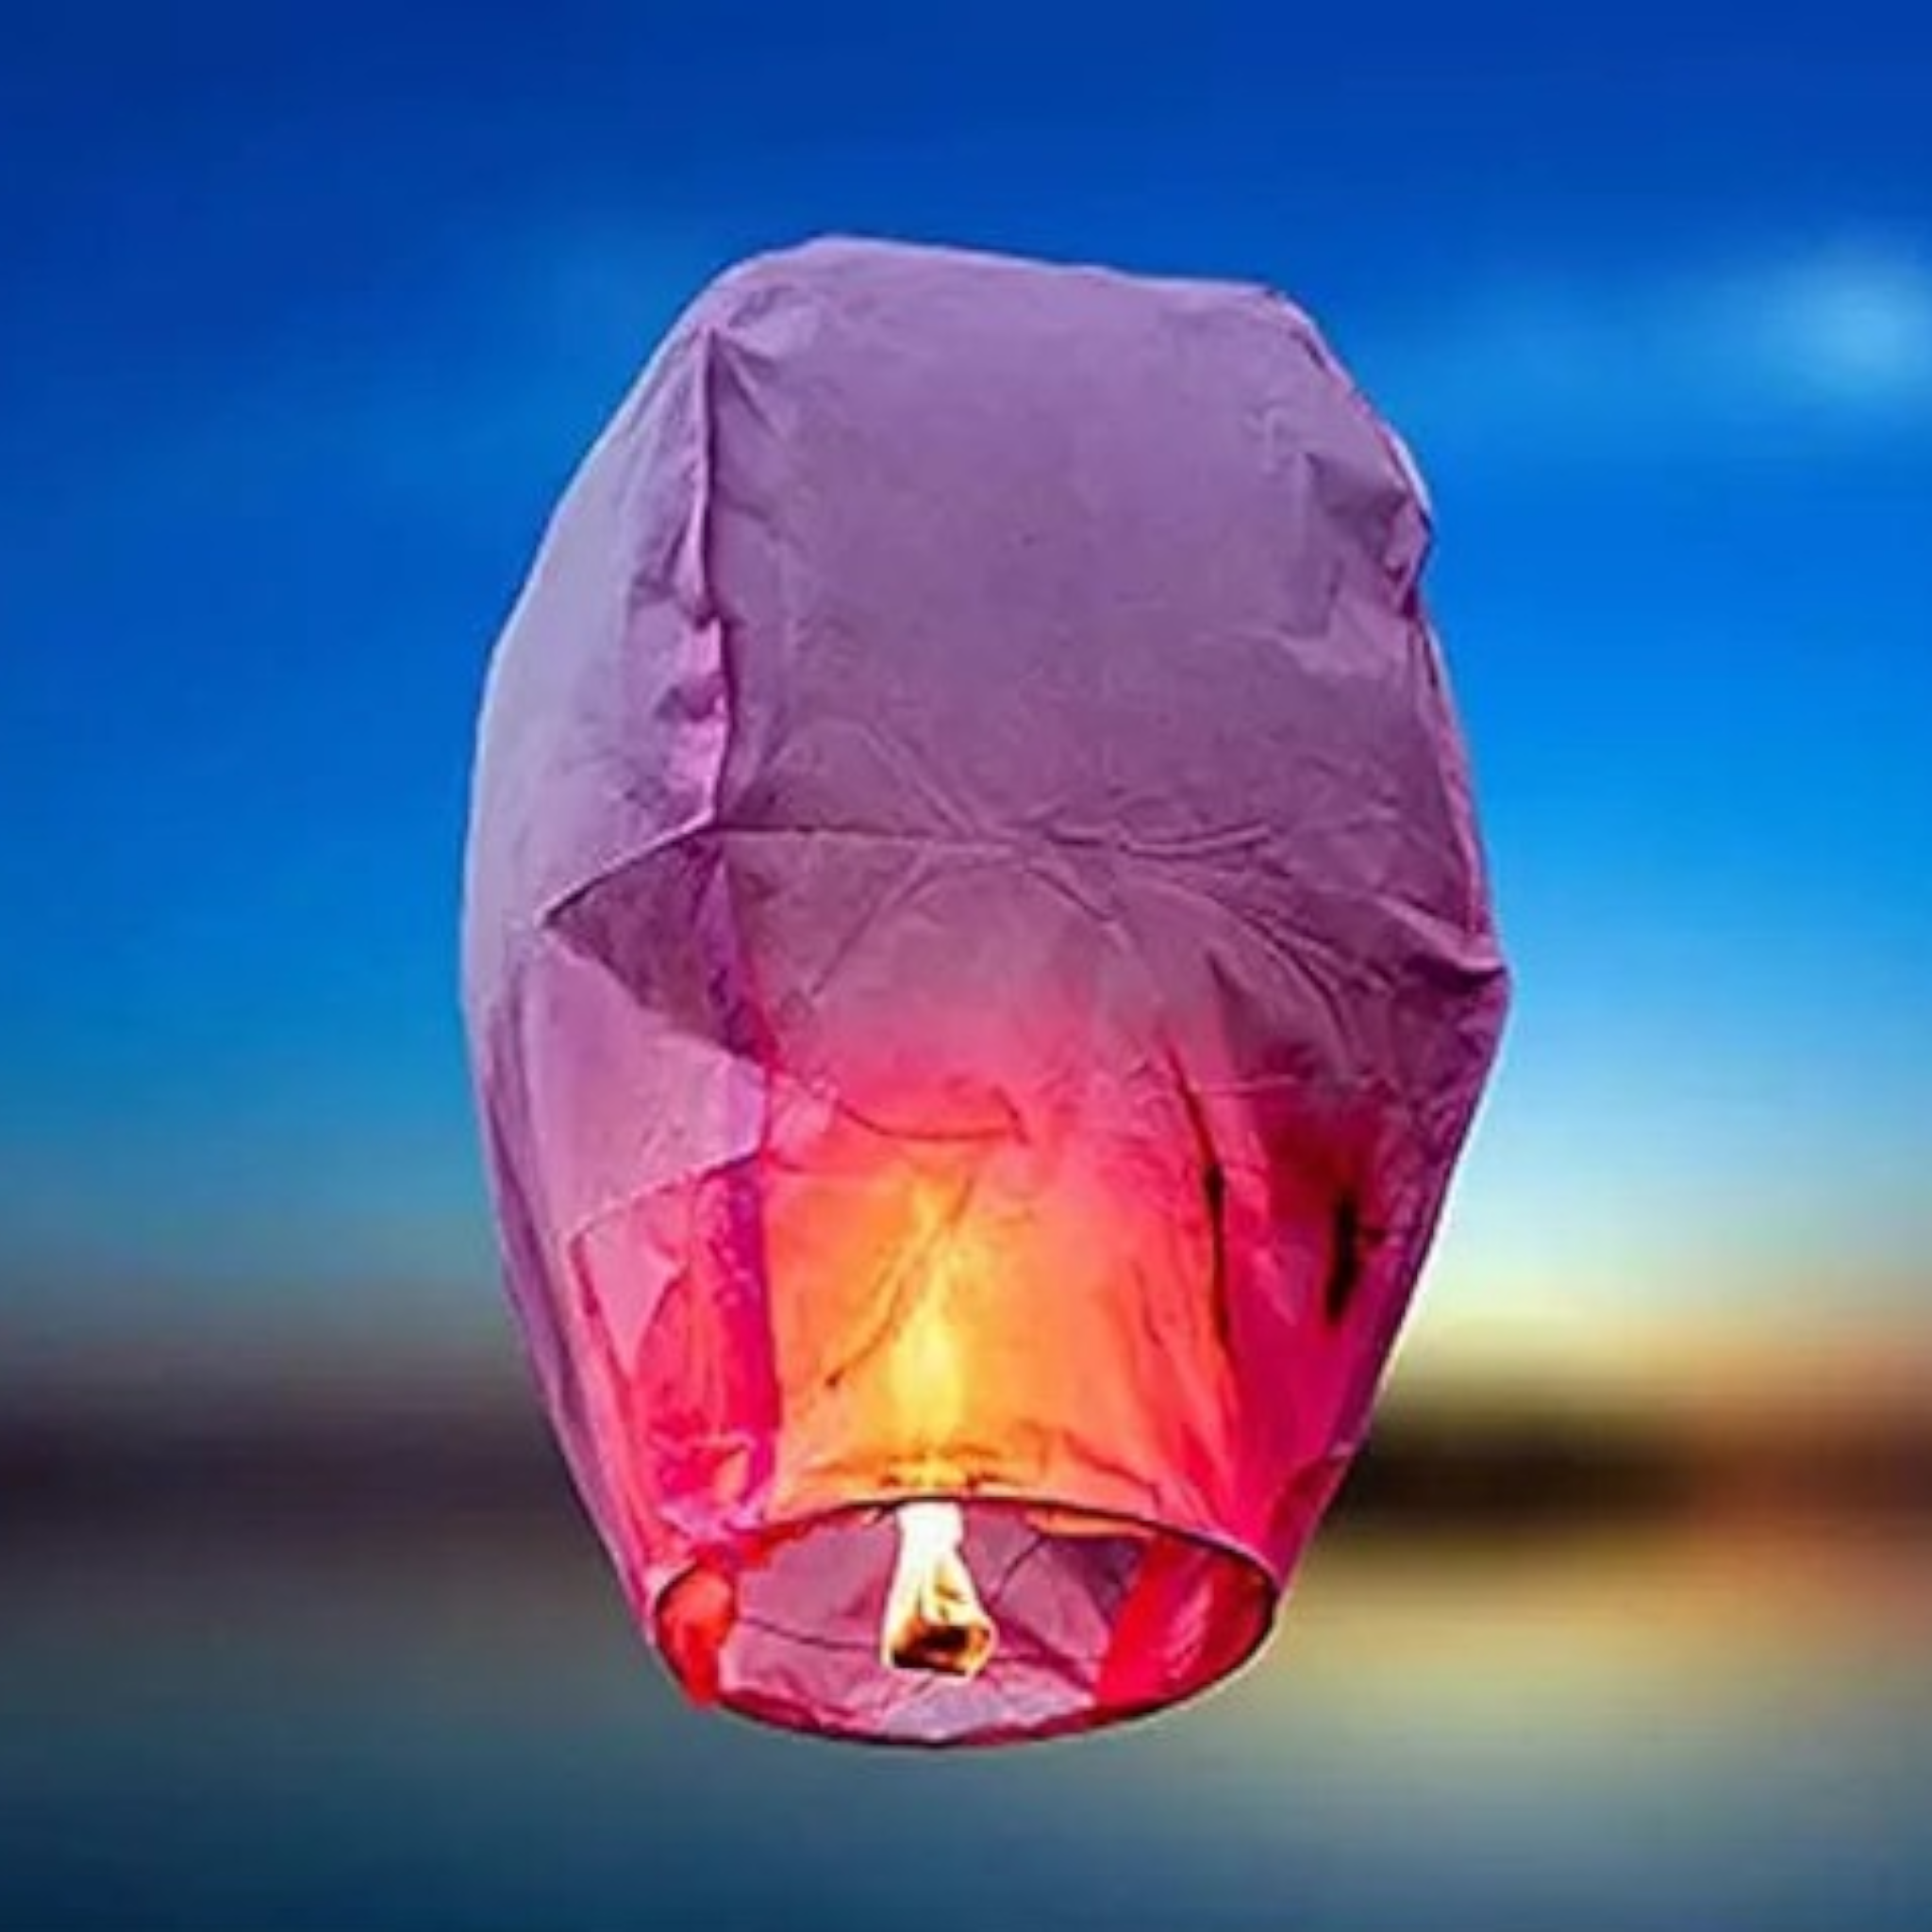 Sky Lantern Cotton Tee Paper with Light